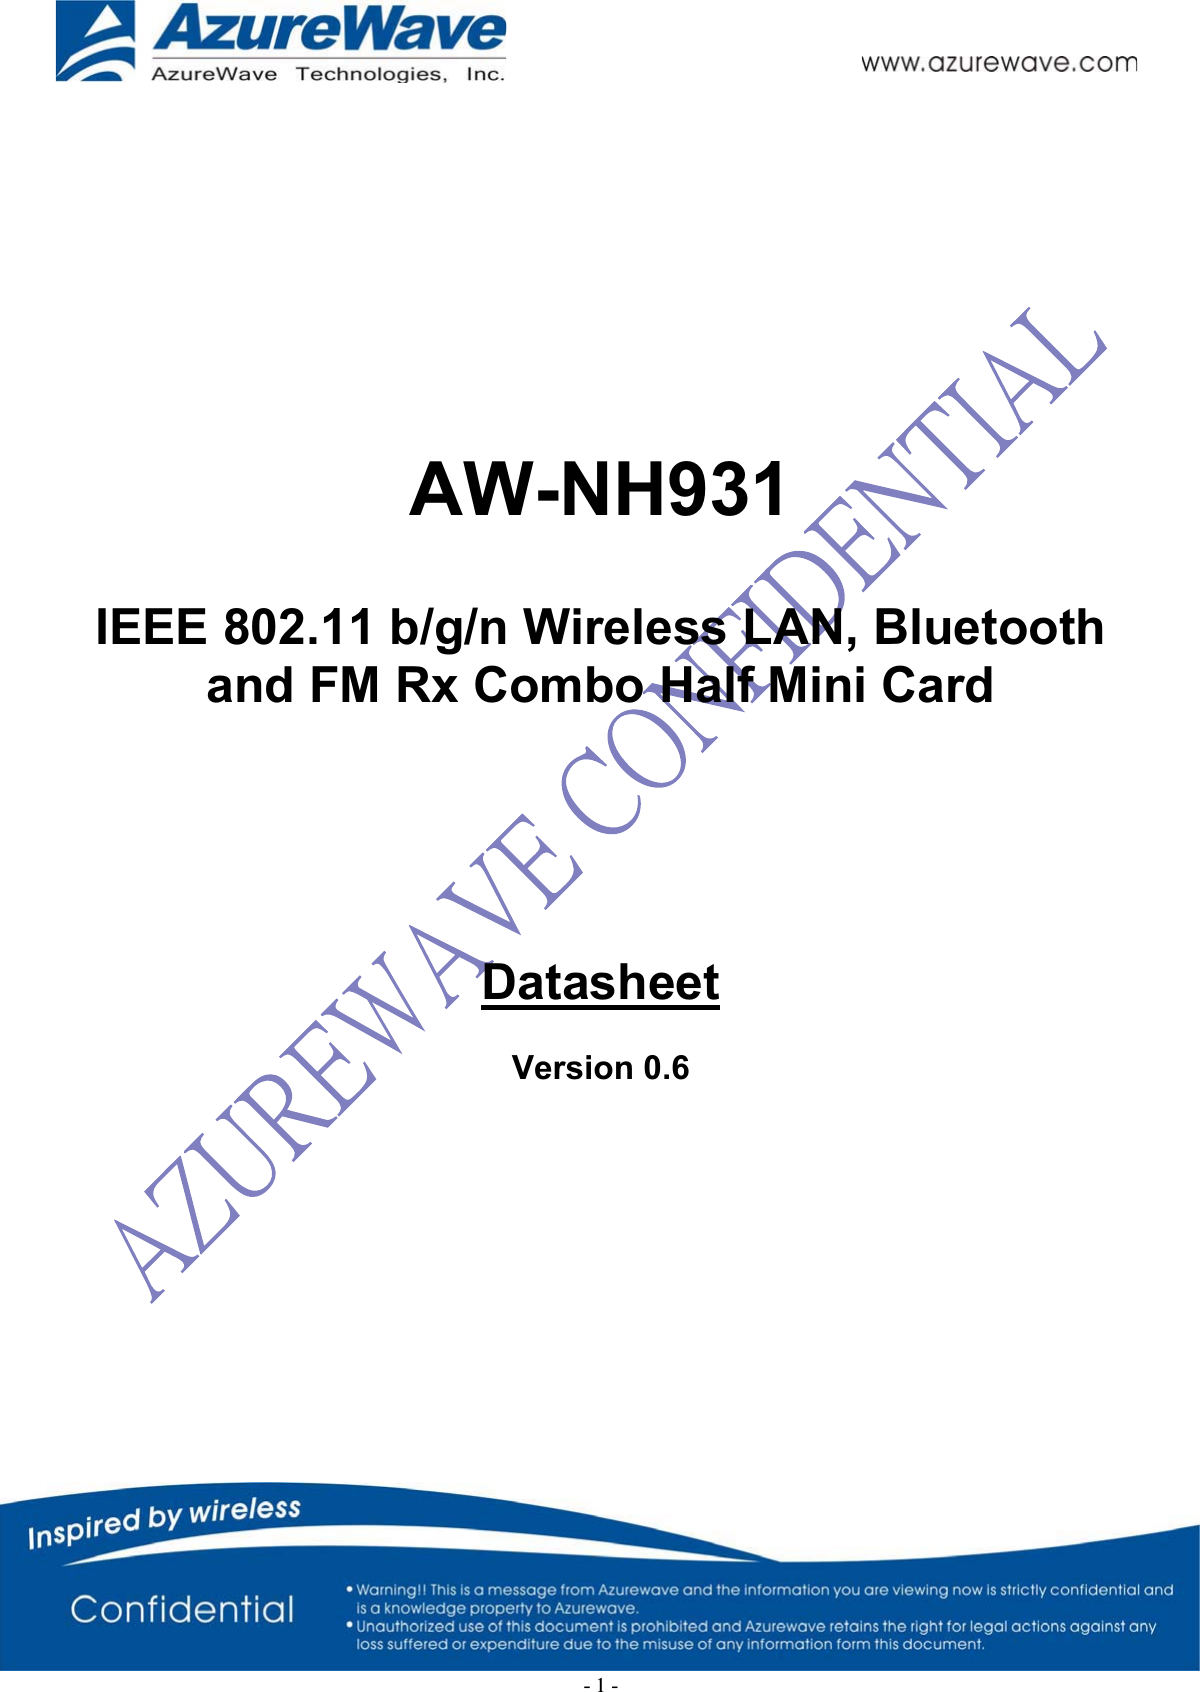     AW-NH931  IEEE 802.11 b/g/n Wireless LAN, Bluetooth and FM Rx Combo Half Mini Card       Datasheet  Version 0.6         -1-